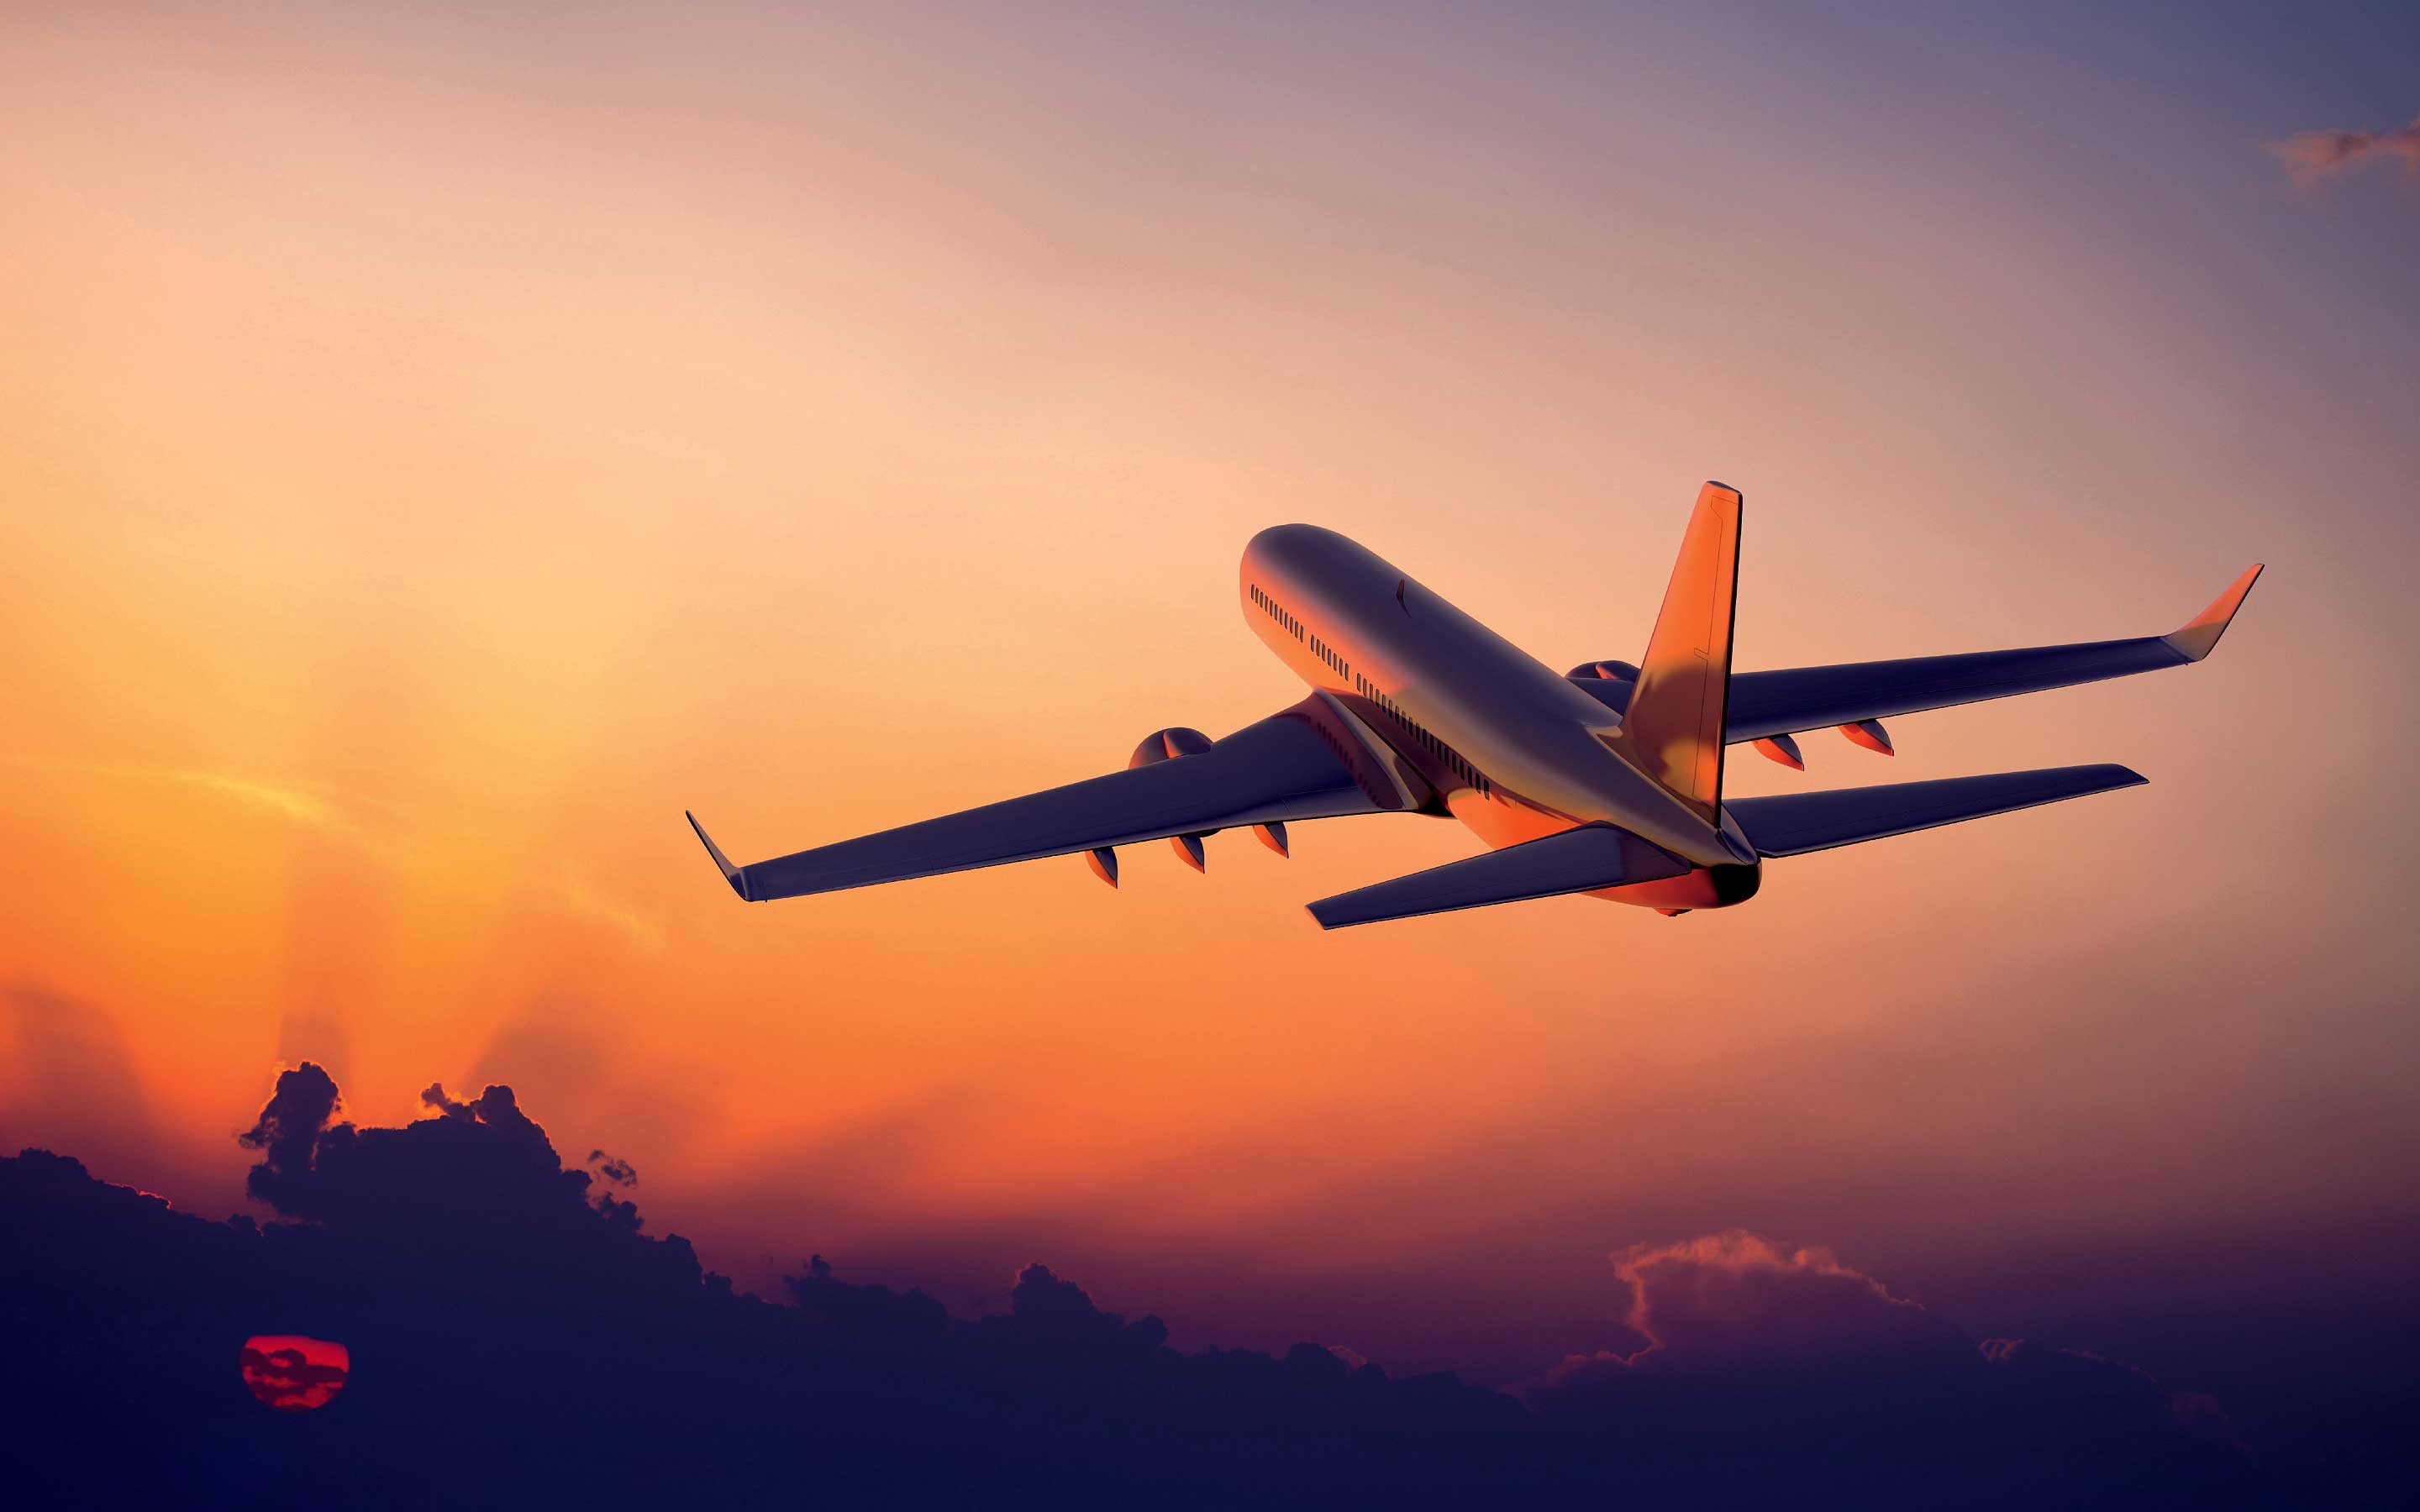 All passenger flight arrivals to Sri Lanka suspend